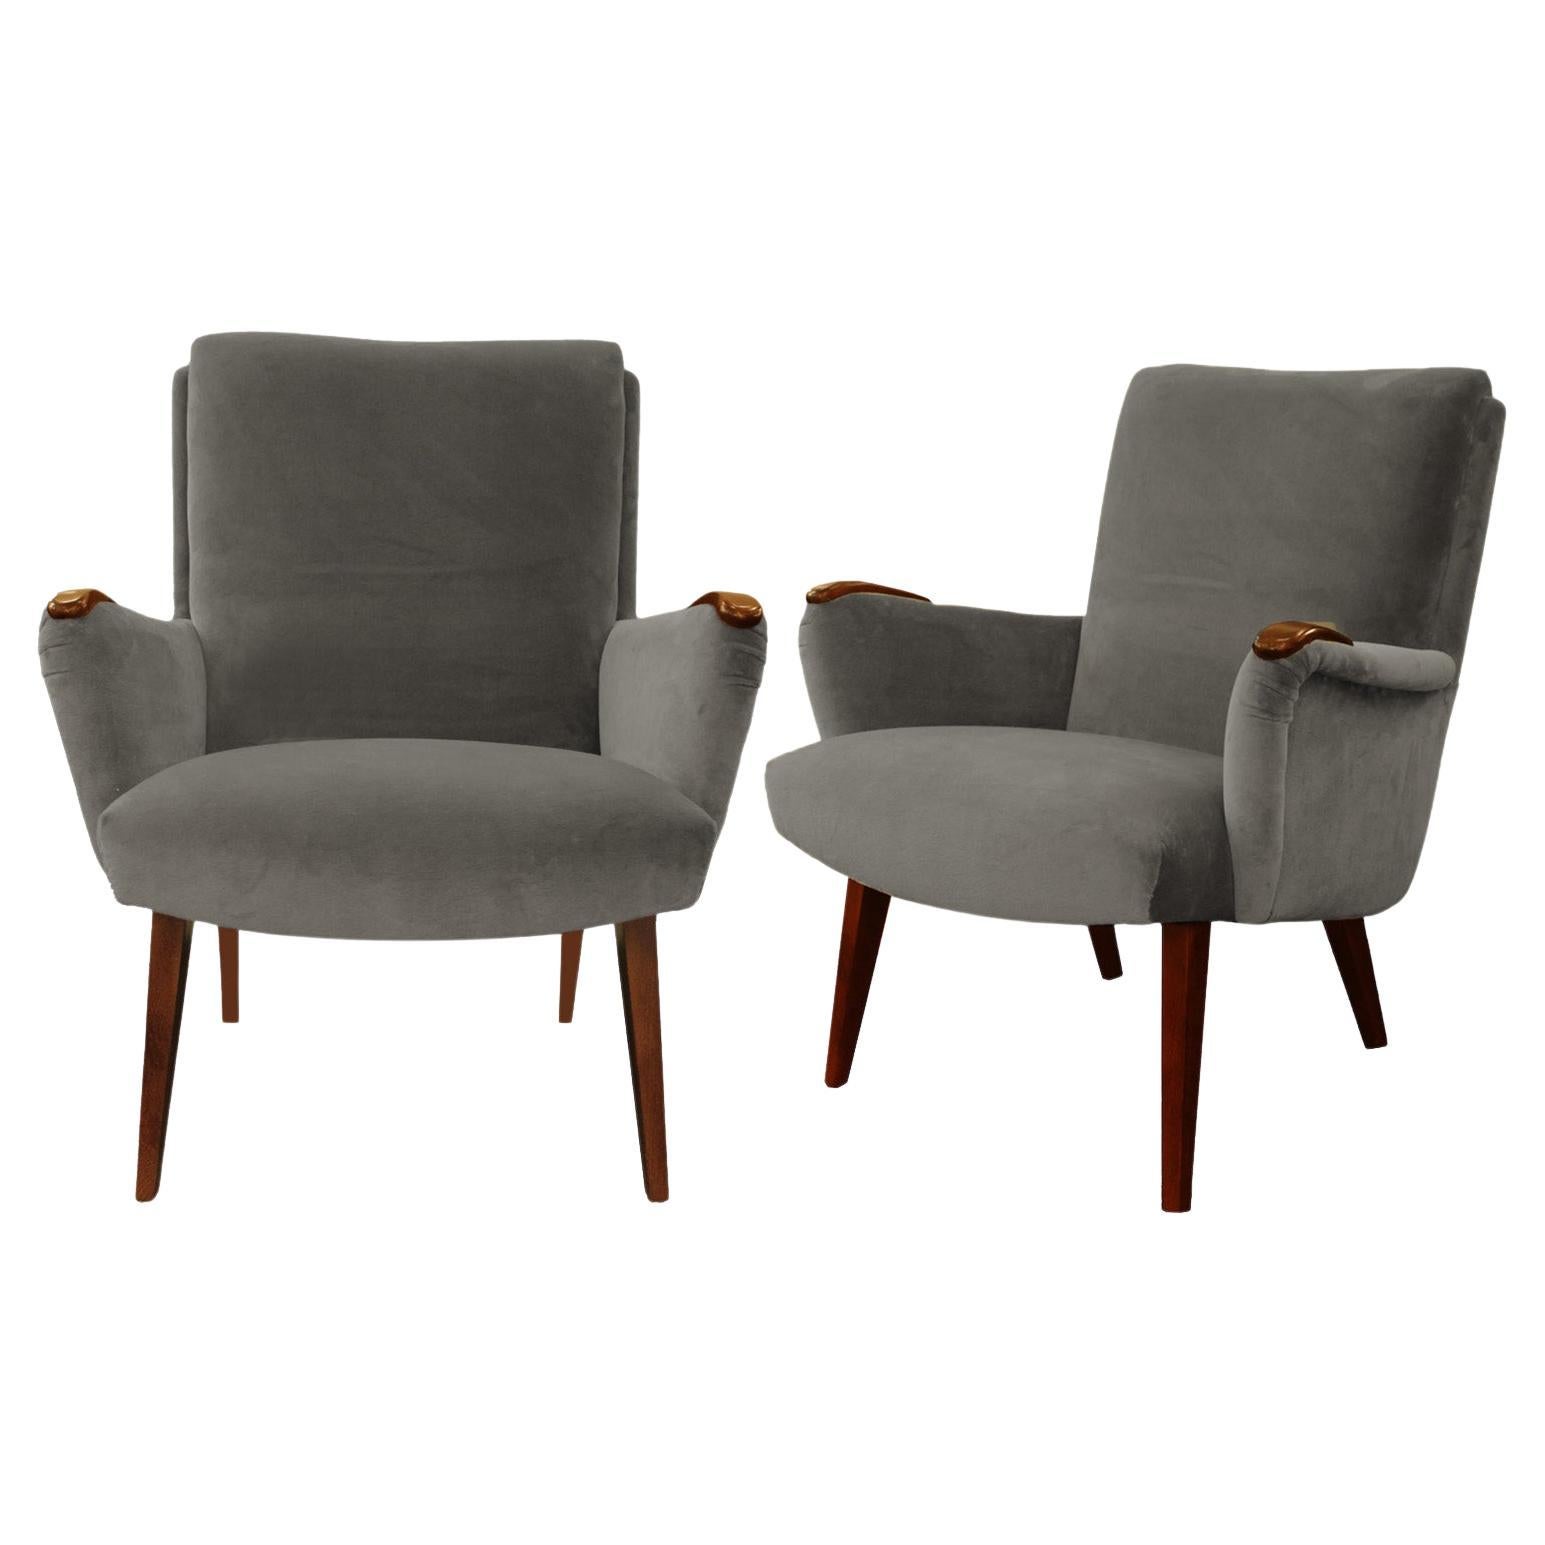 Stylish Pair of Italian Mid-Century Modern Lounge Chairs, 1950s